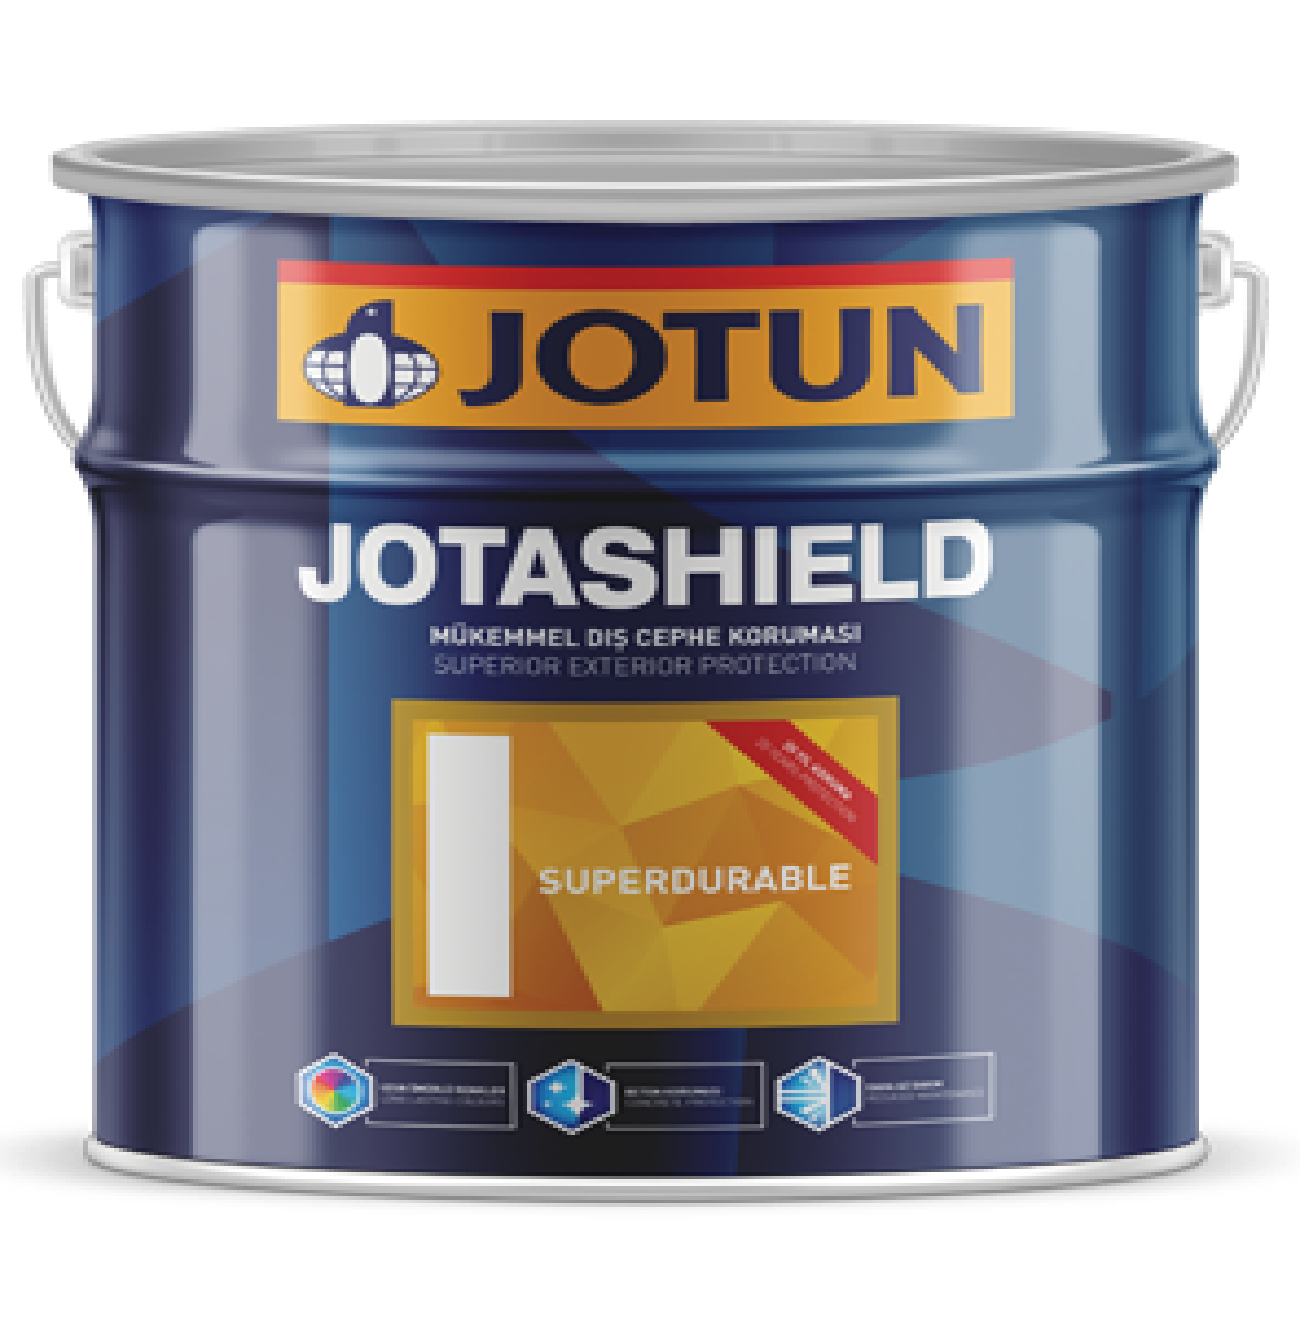 Jotashield SuperDurable can image